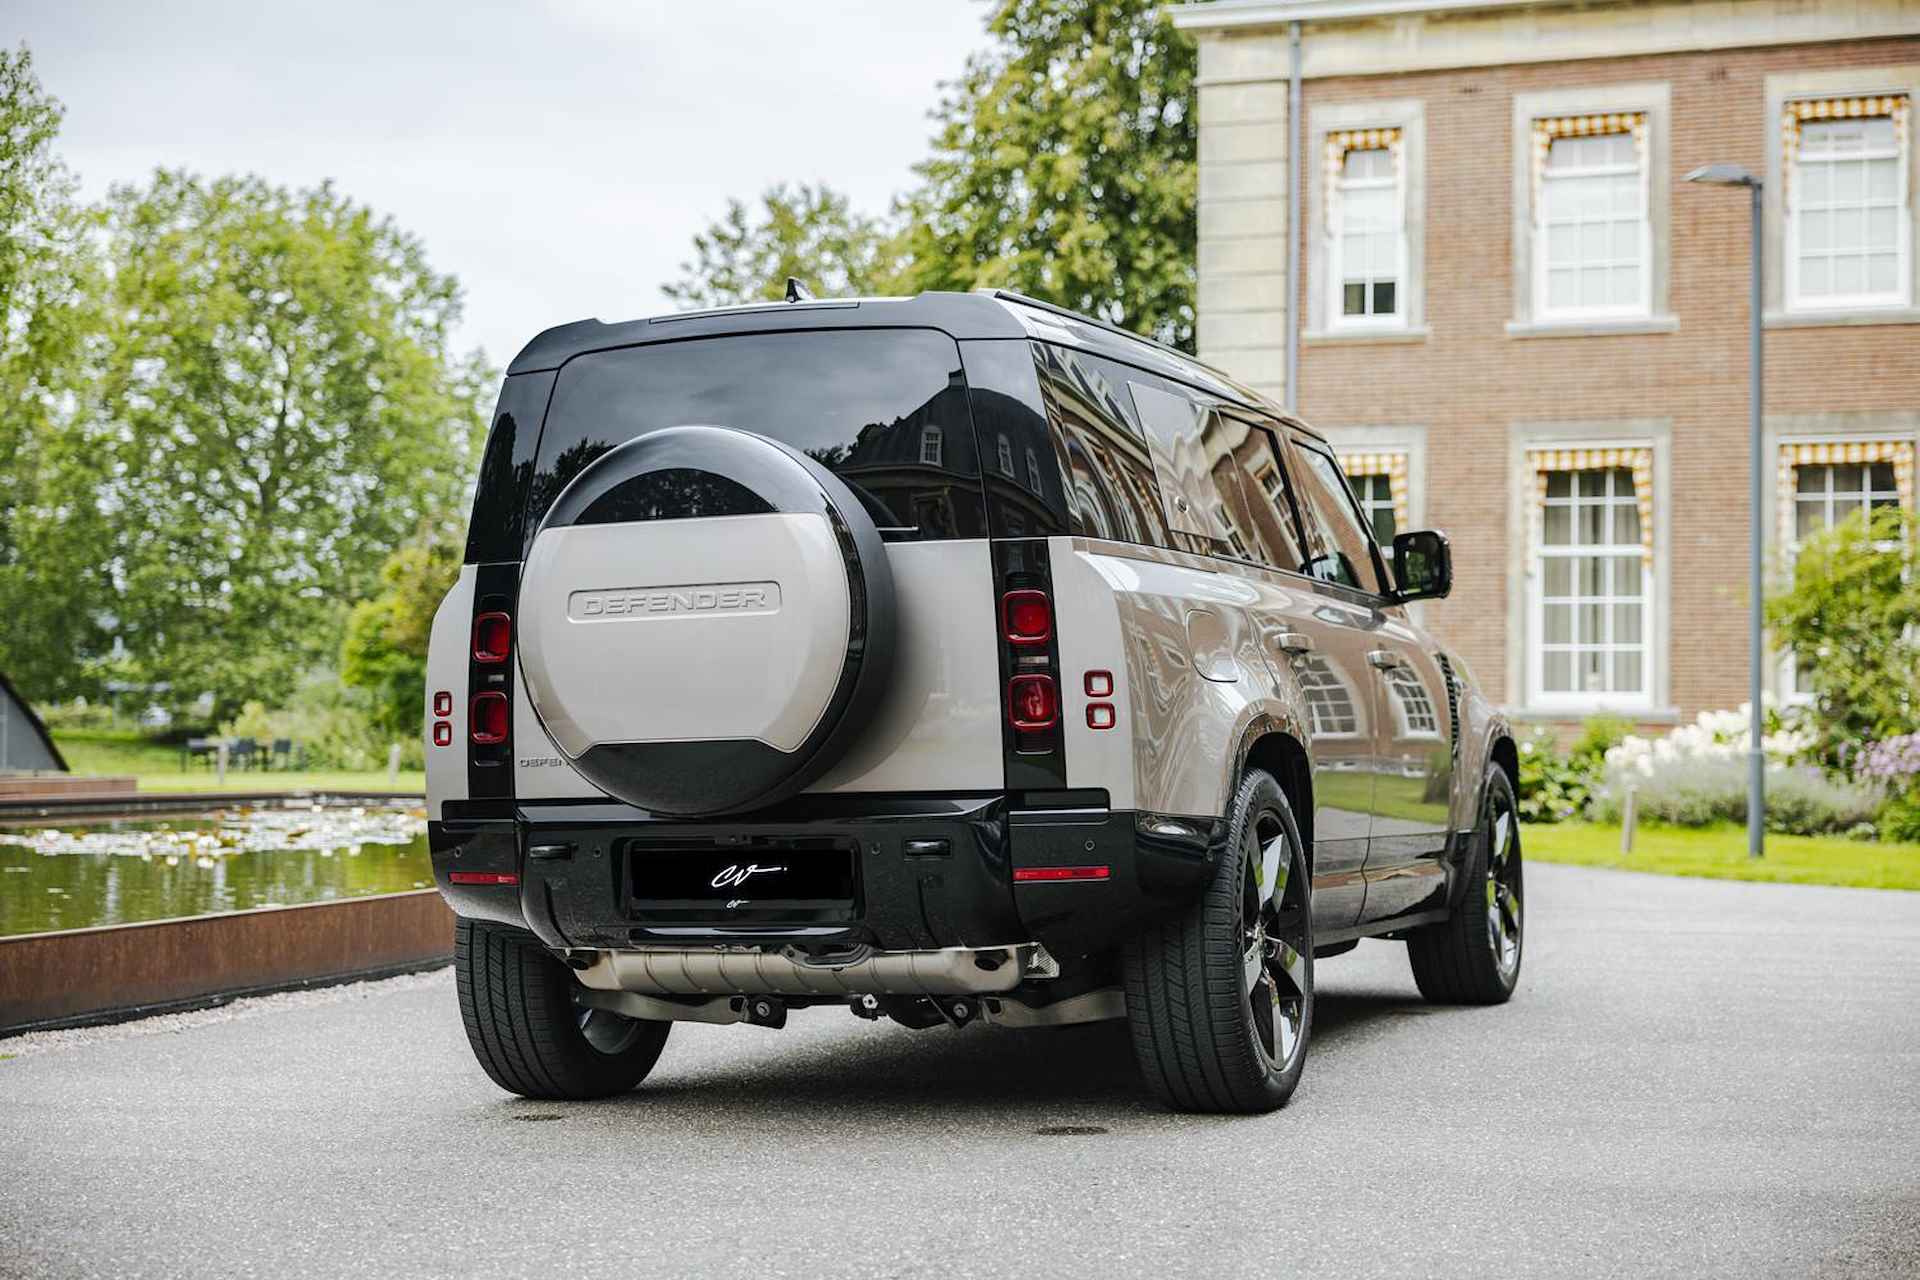 Land Rover Defender 2.0 P400e 110 X-Dynamic HSE | Panoramadak | 22" Velgen in Gloss Black | 11,4" Touch Screen | Cold Climate Pack | Elektrische Trekhaak | Expedition imperiaal | Uitklapbare Dakladder| All Season Banden - 33/43